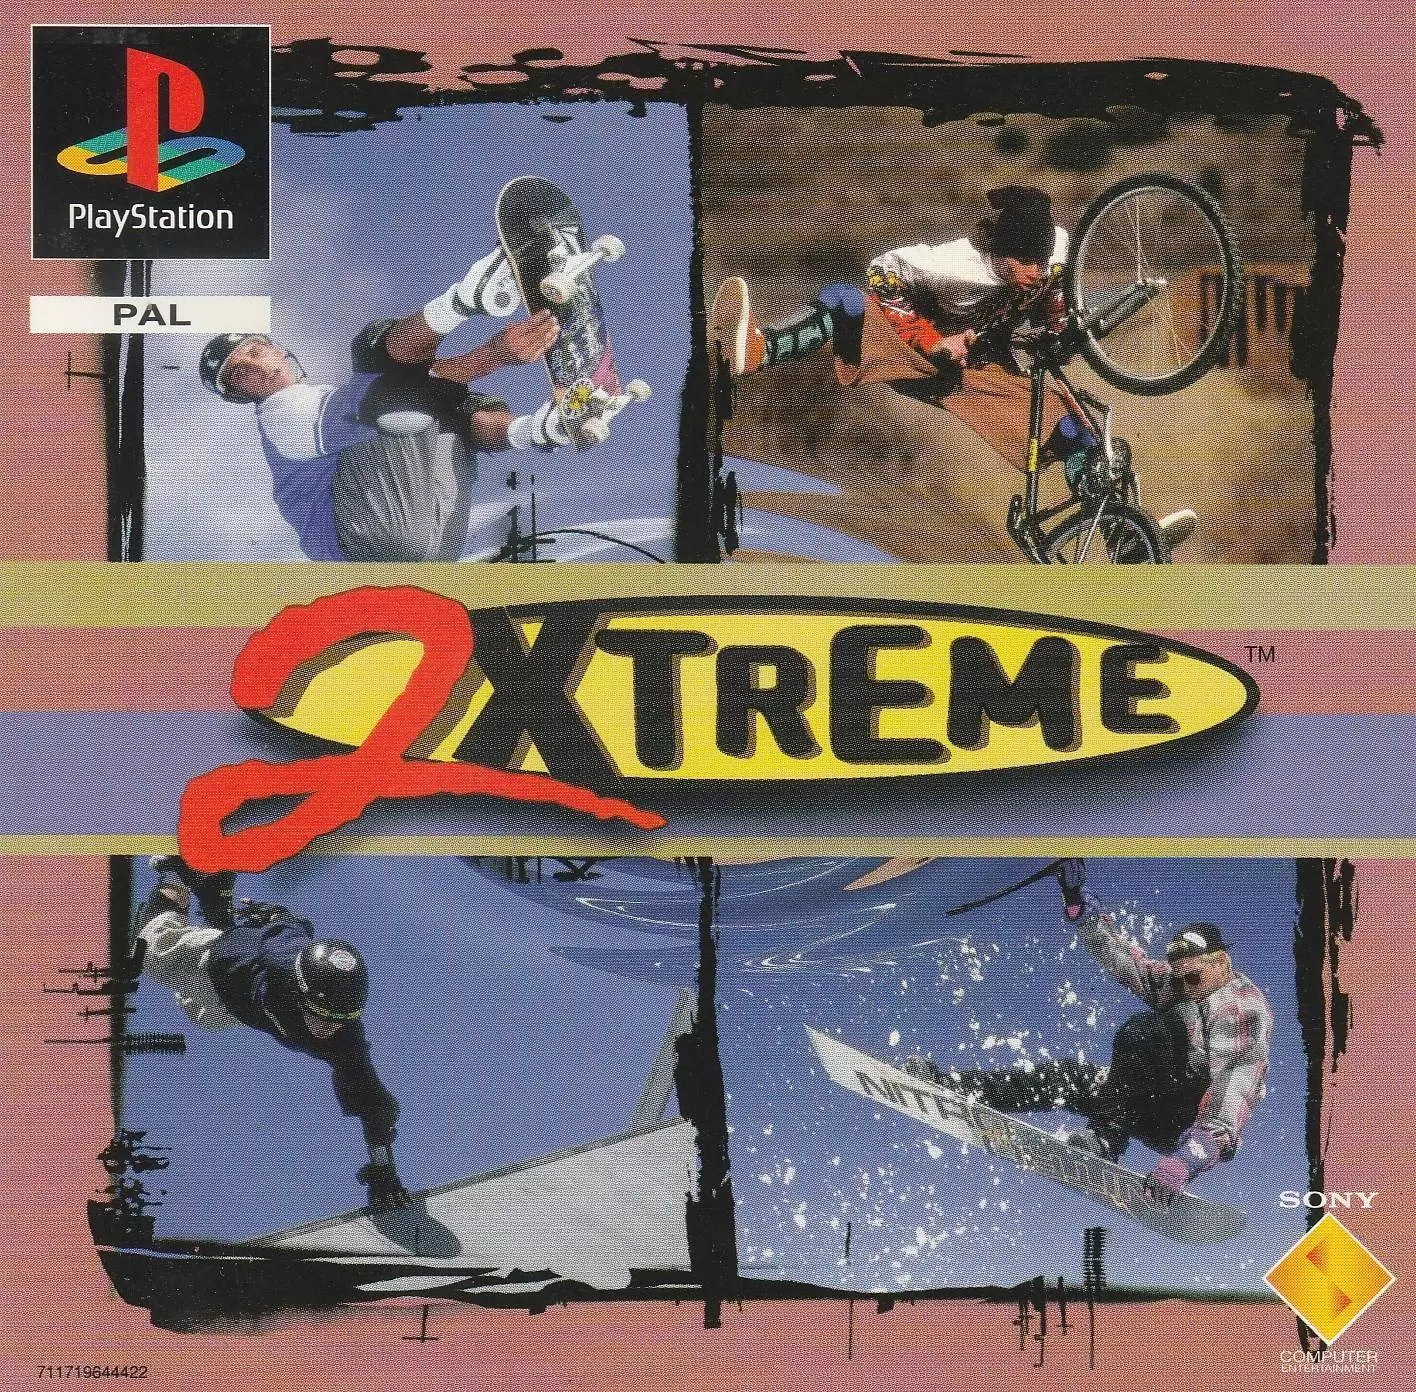 Playstation games - 2xtreme